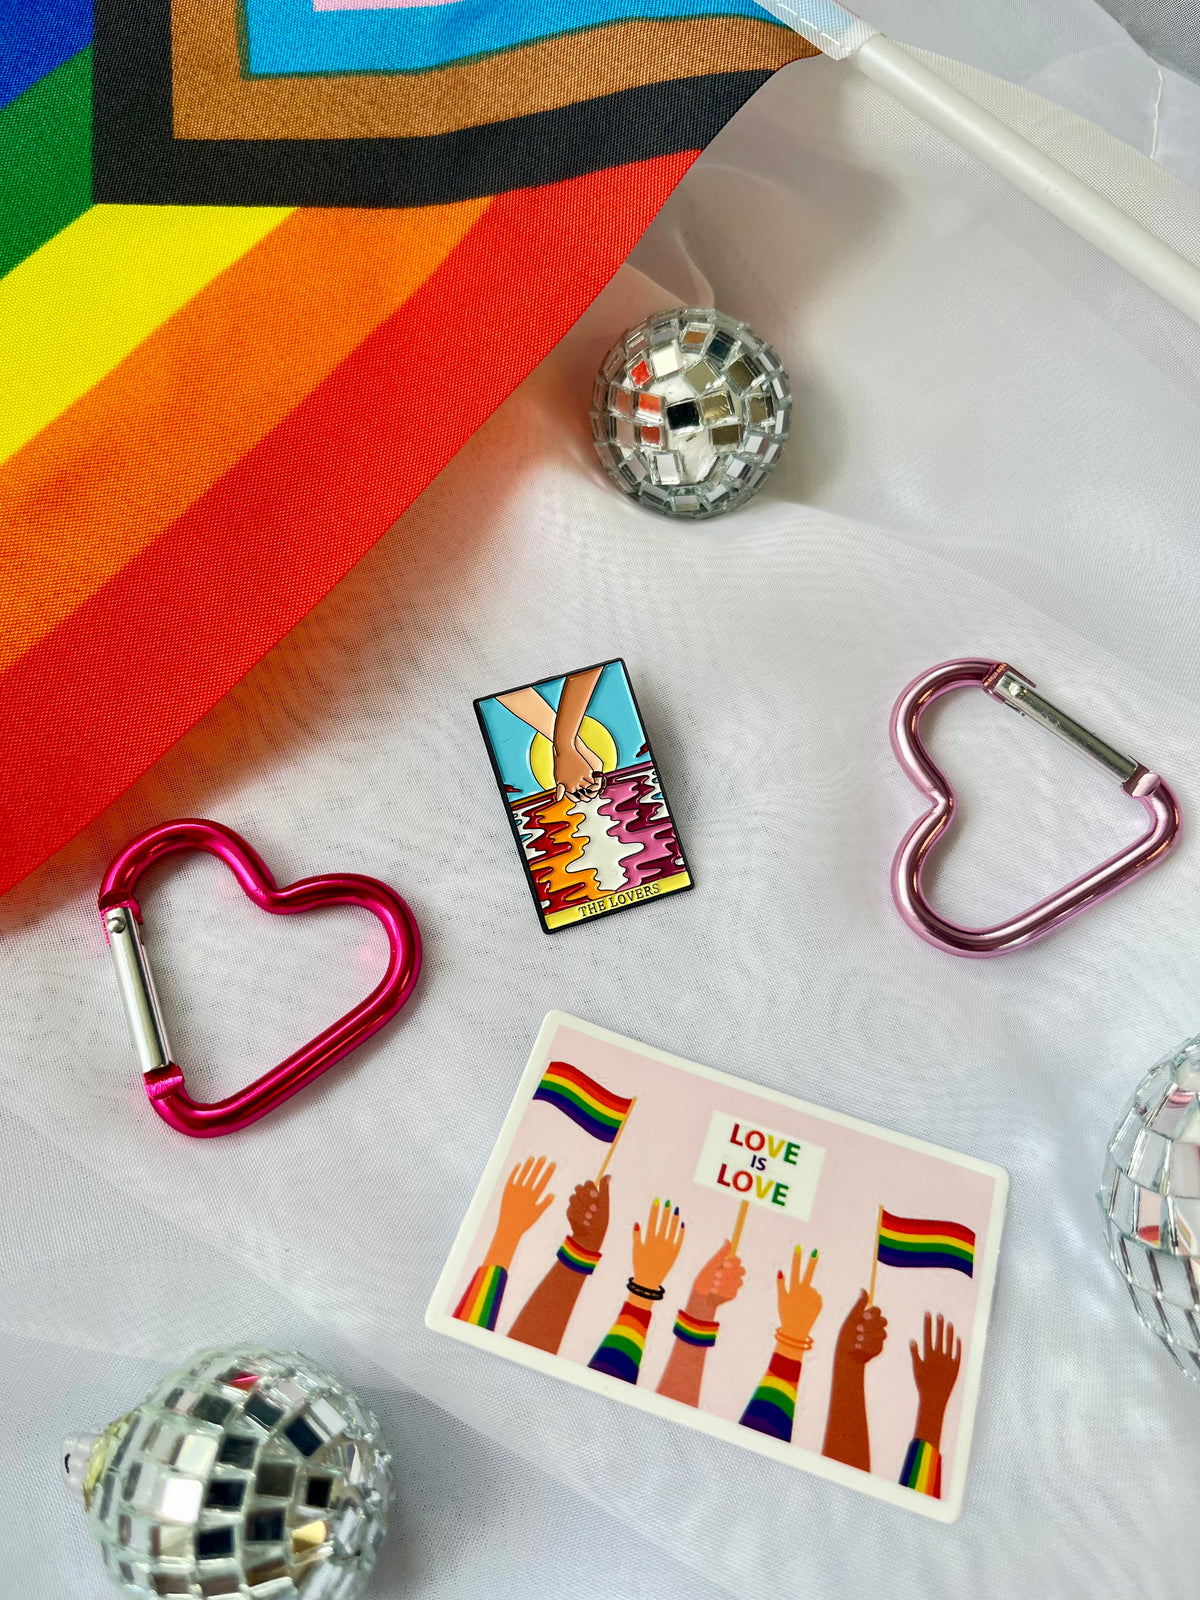 The Lovers Lesbian Tarot Pin